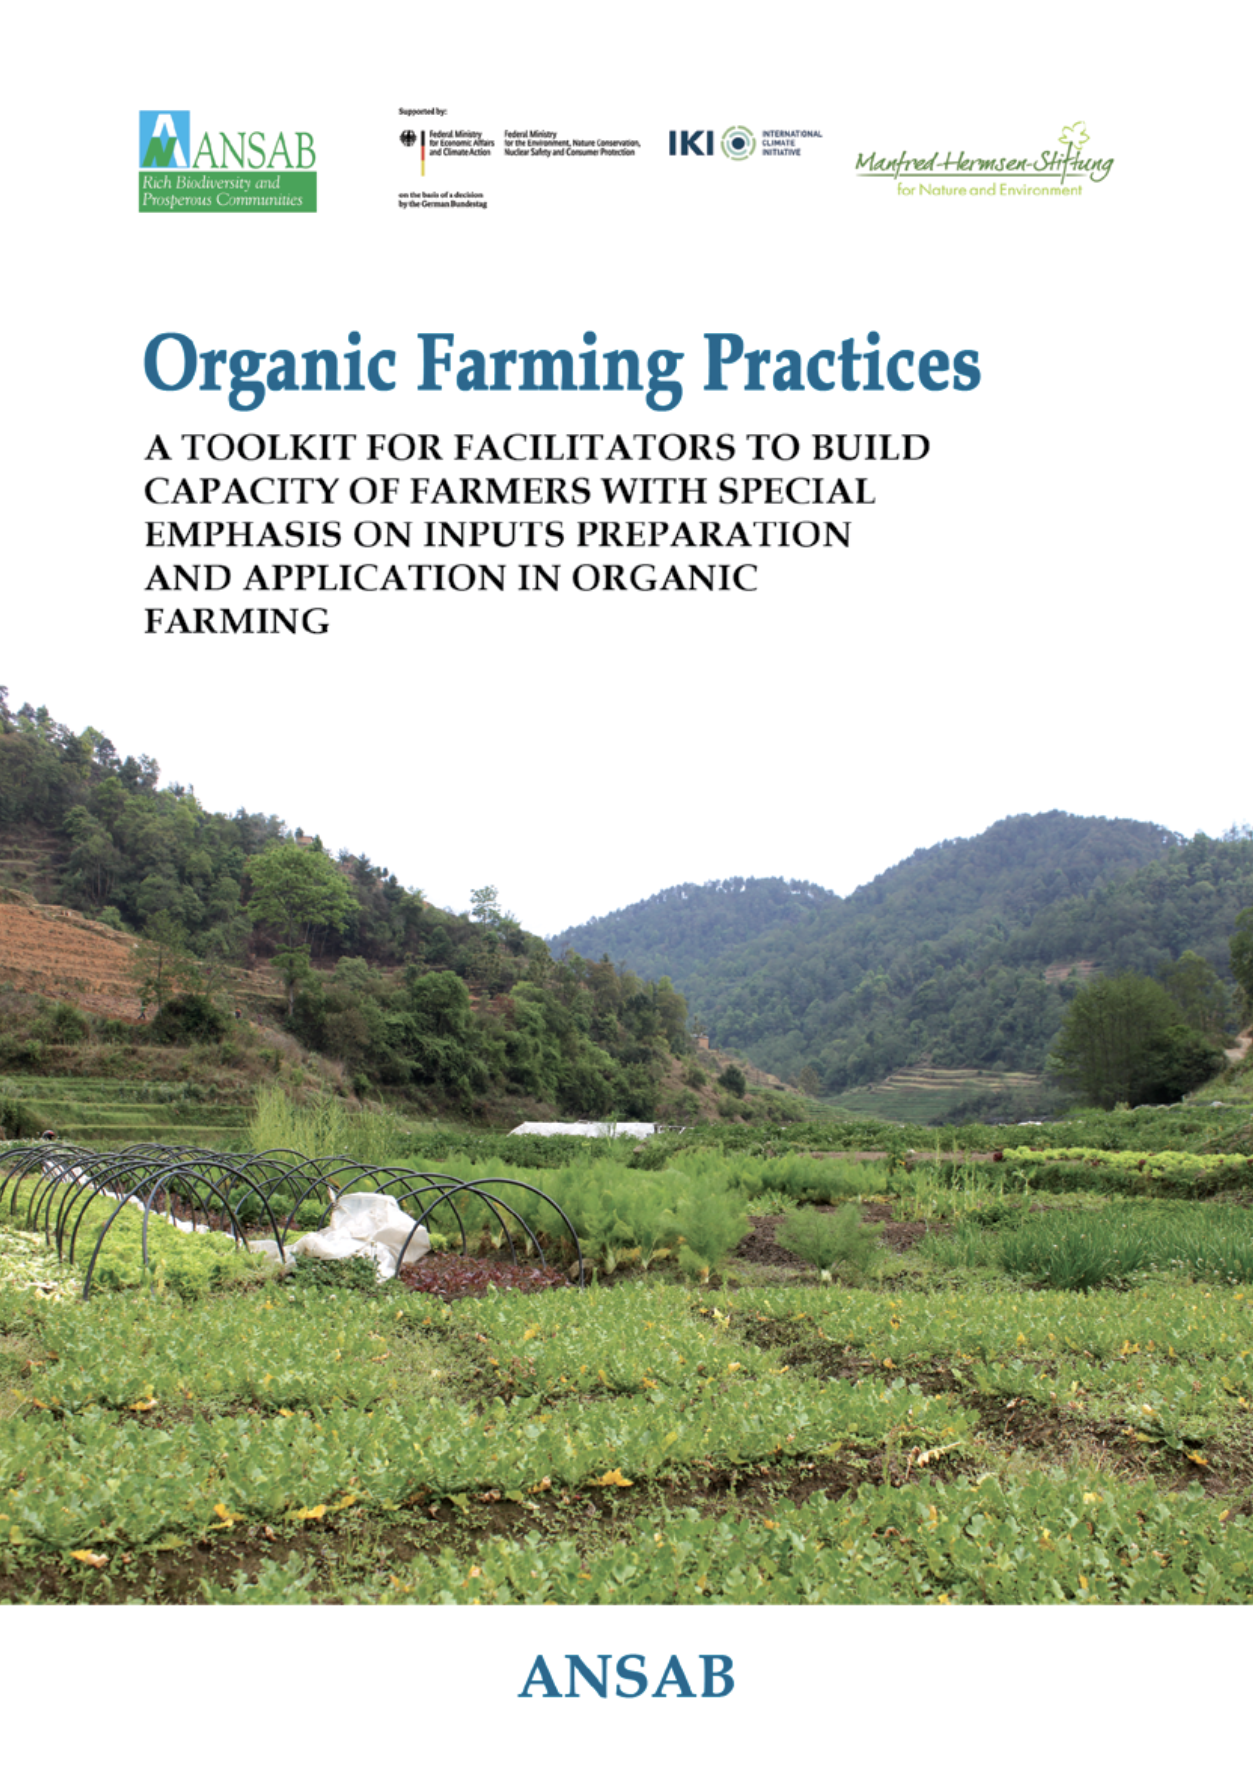 Toolkit on Organic Farming Practices